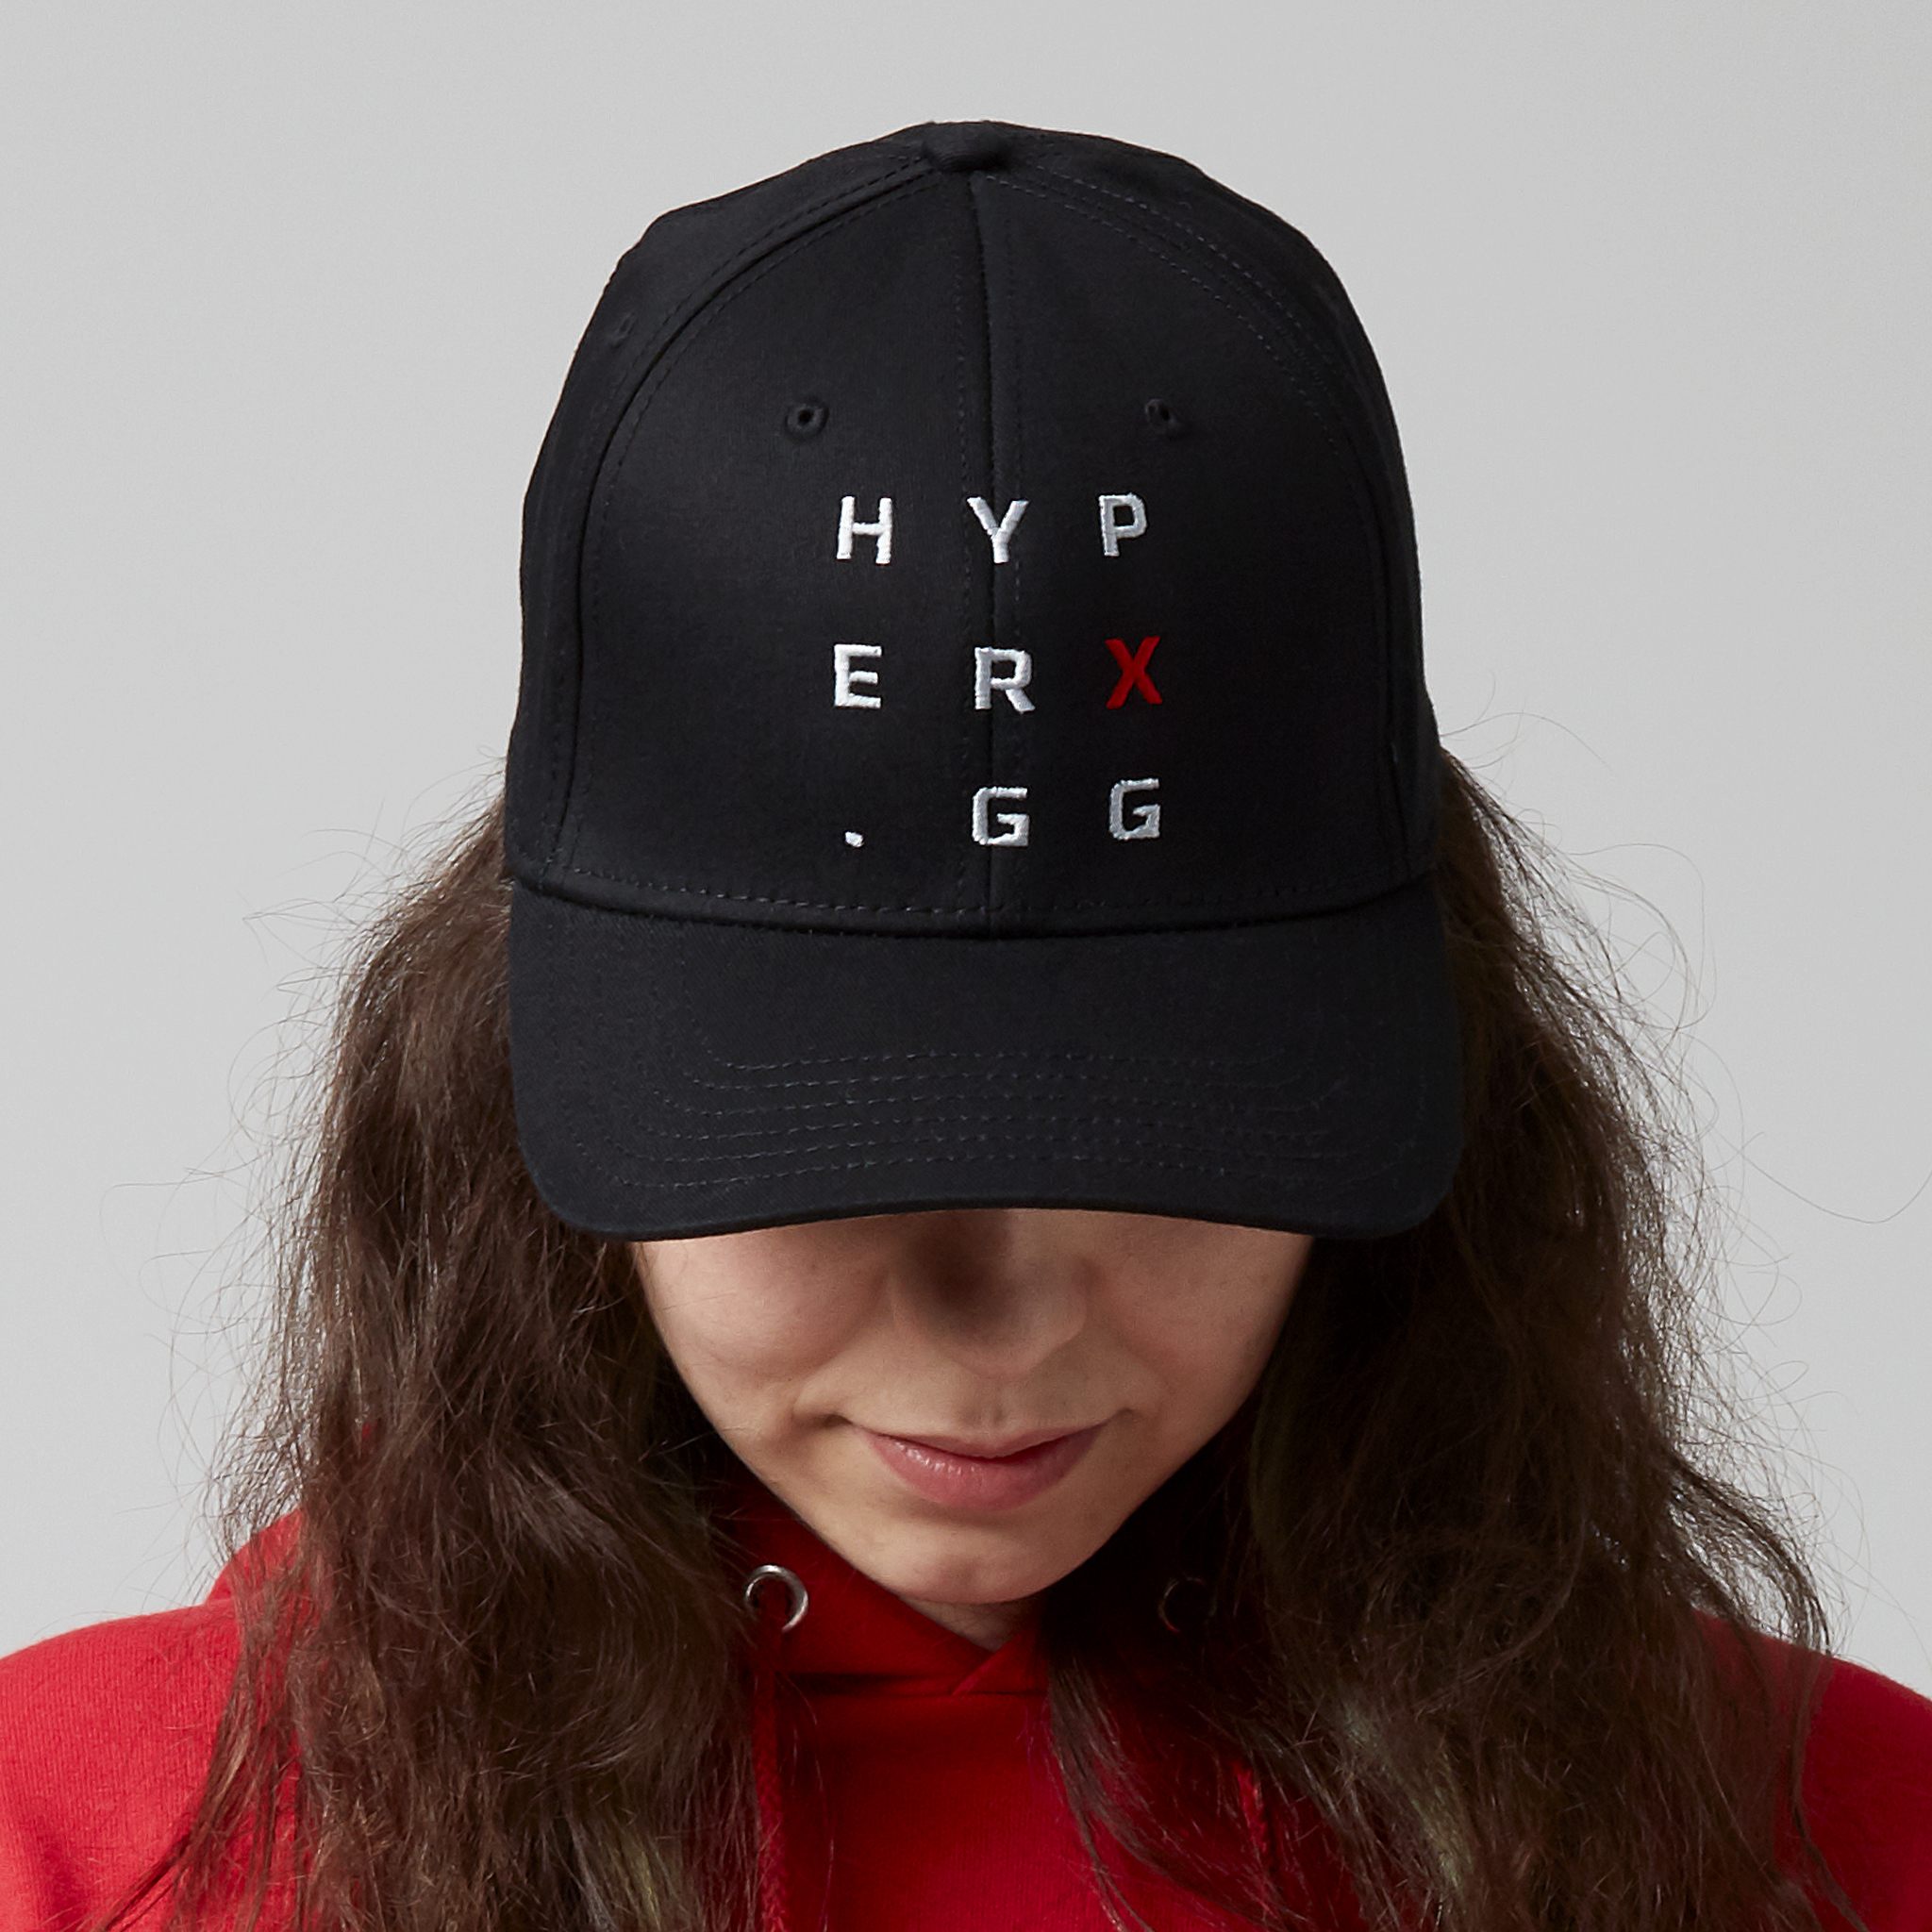 hyperx GG Clothing Collection